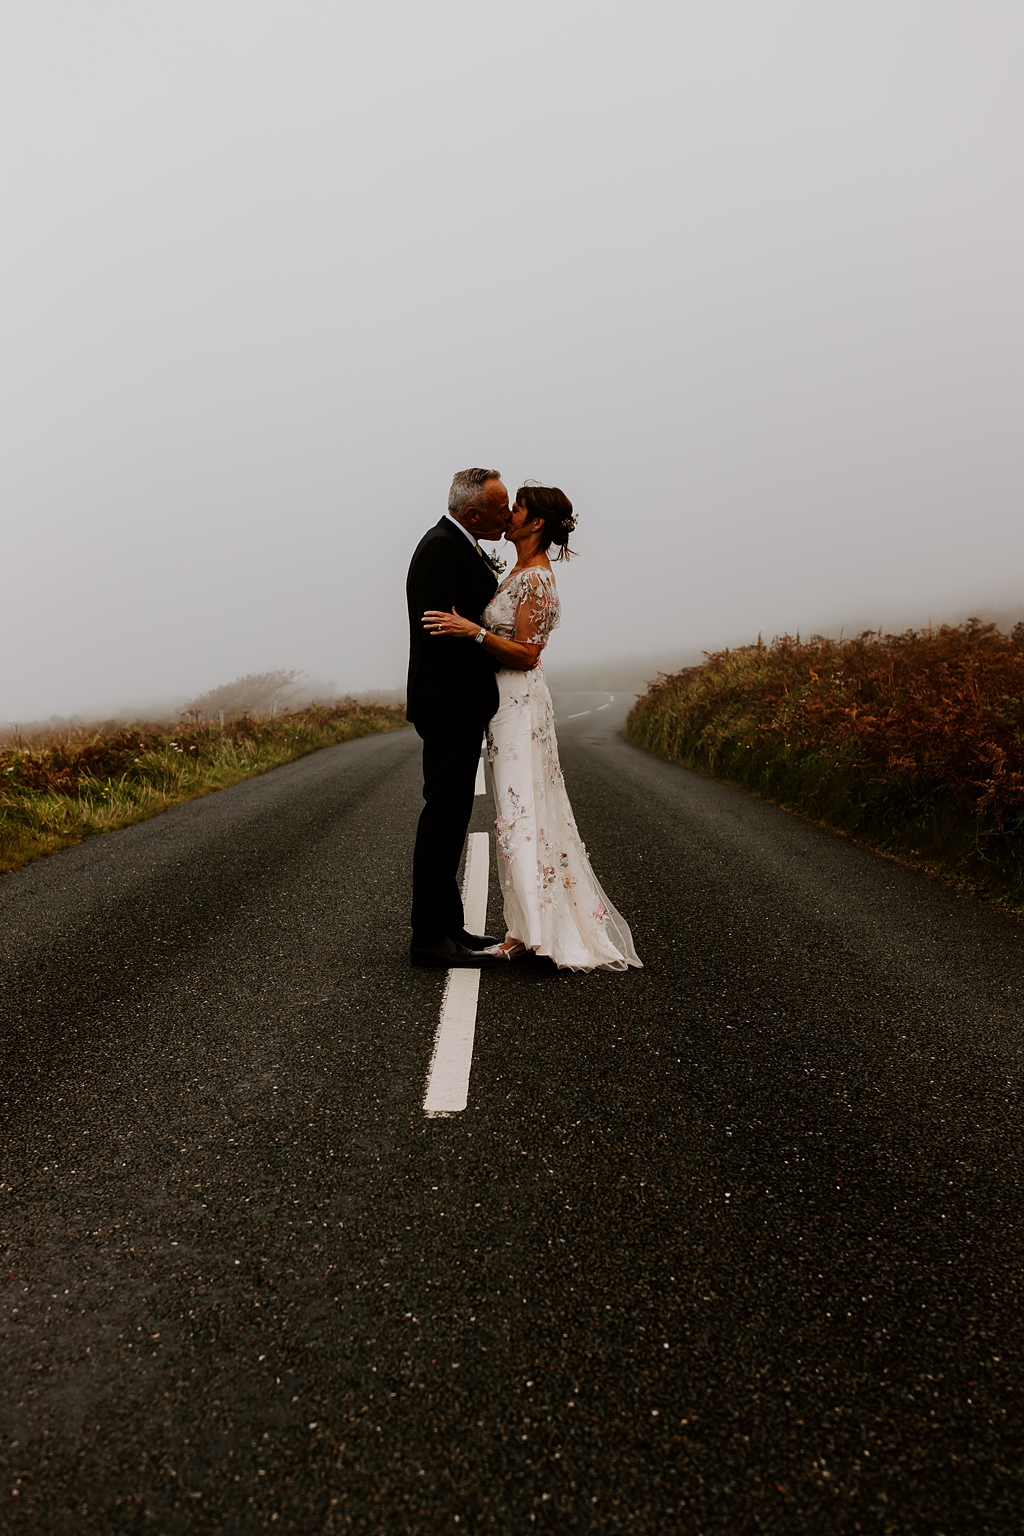 elopement photography by Devon wedding photographer Thomas Frost